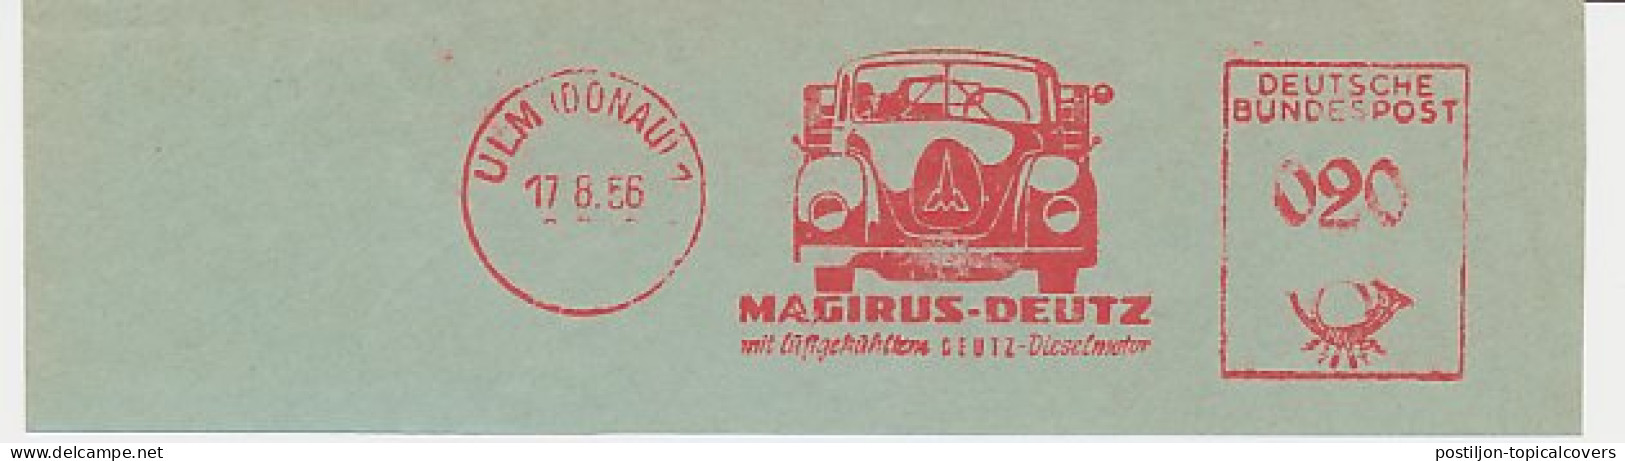 Meter Cut Germany 1956 Truck - Magirus Deutz - Trucks